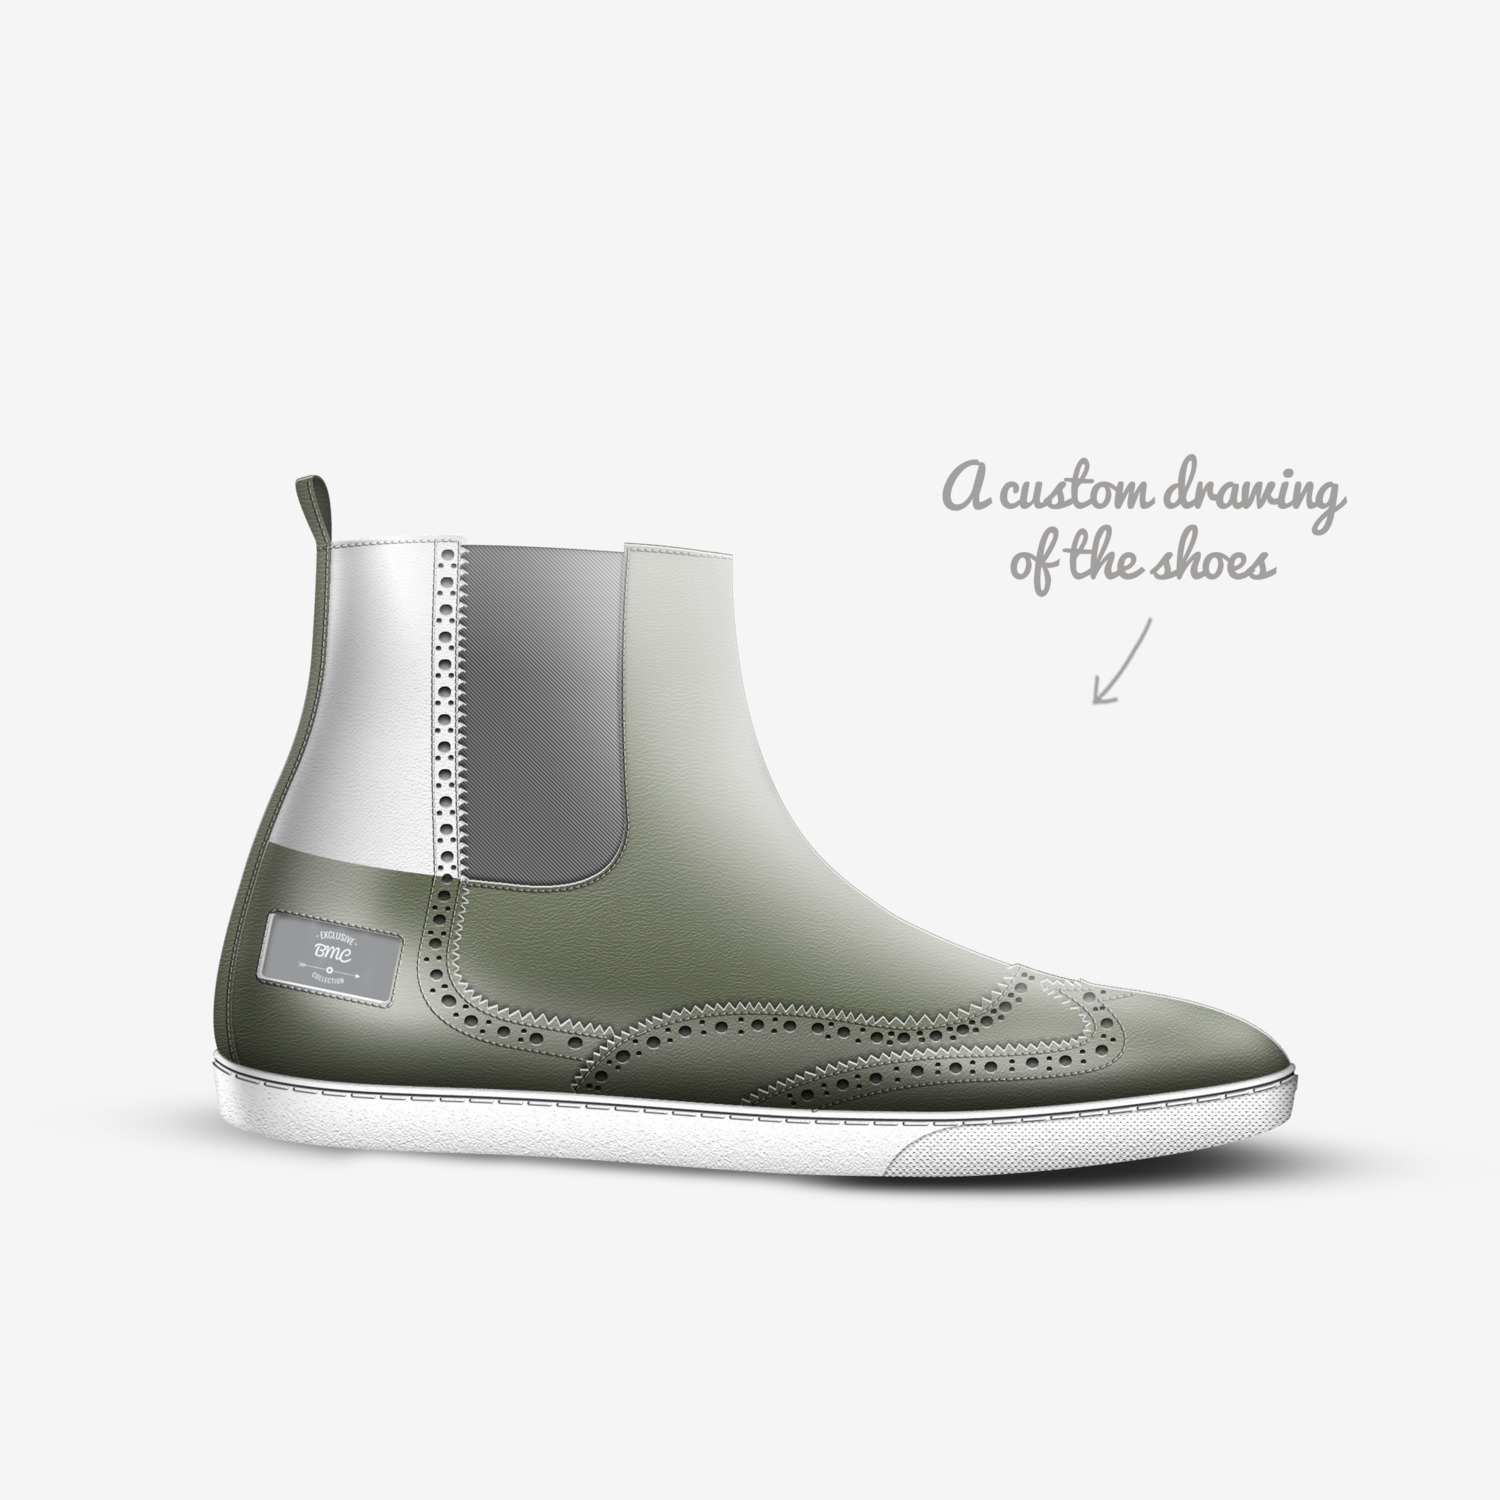 legation genvinde Udgangspunktet BMC | A Custom Shoe concept by Jaime Macdonald